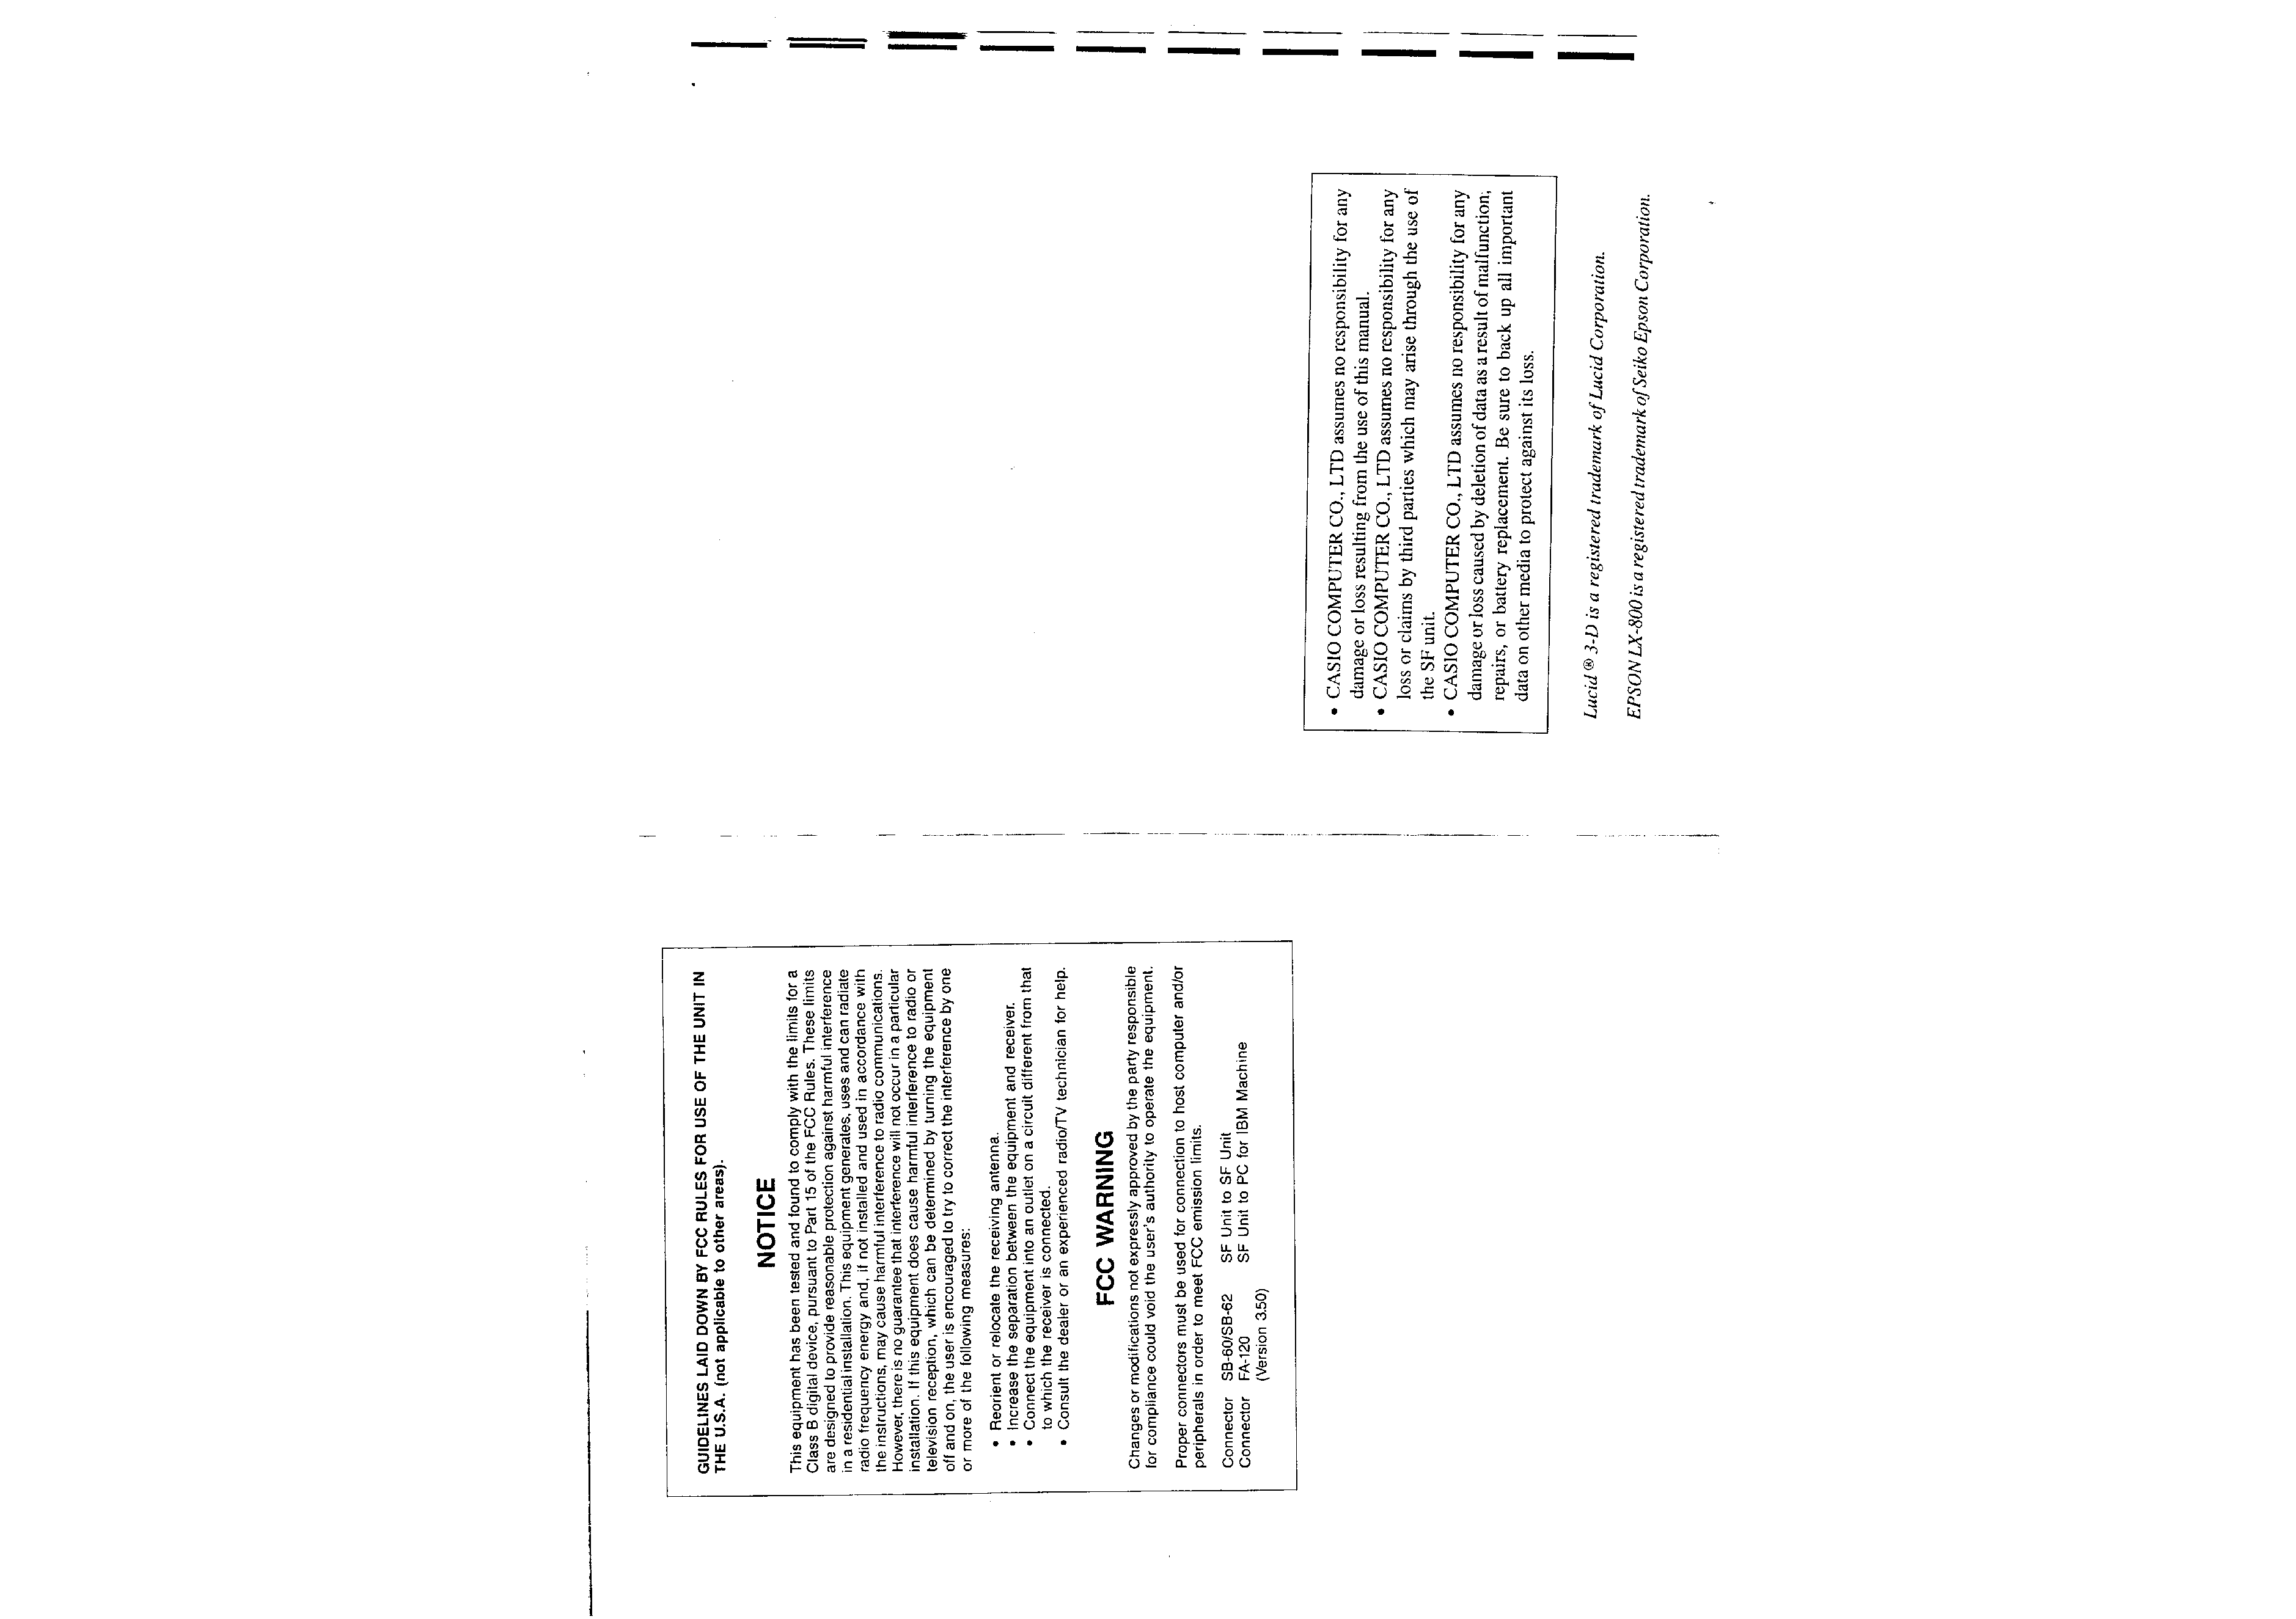 CASIO SFR20 - Owner's Manual Immediate Download